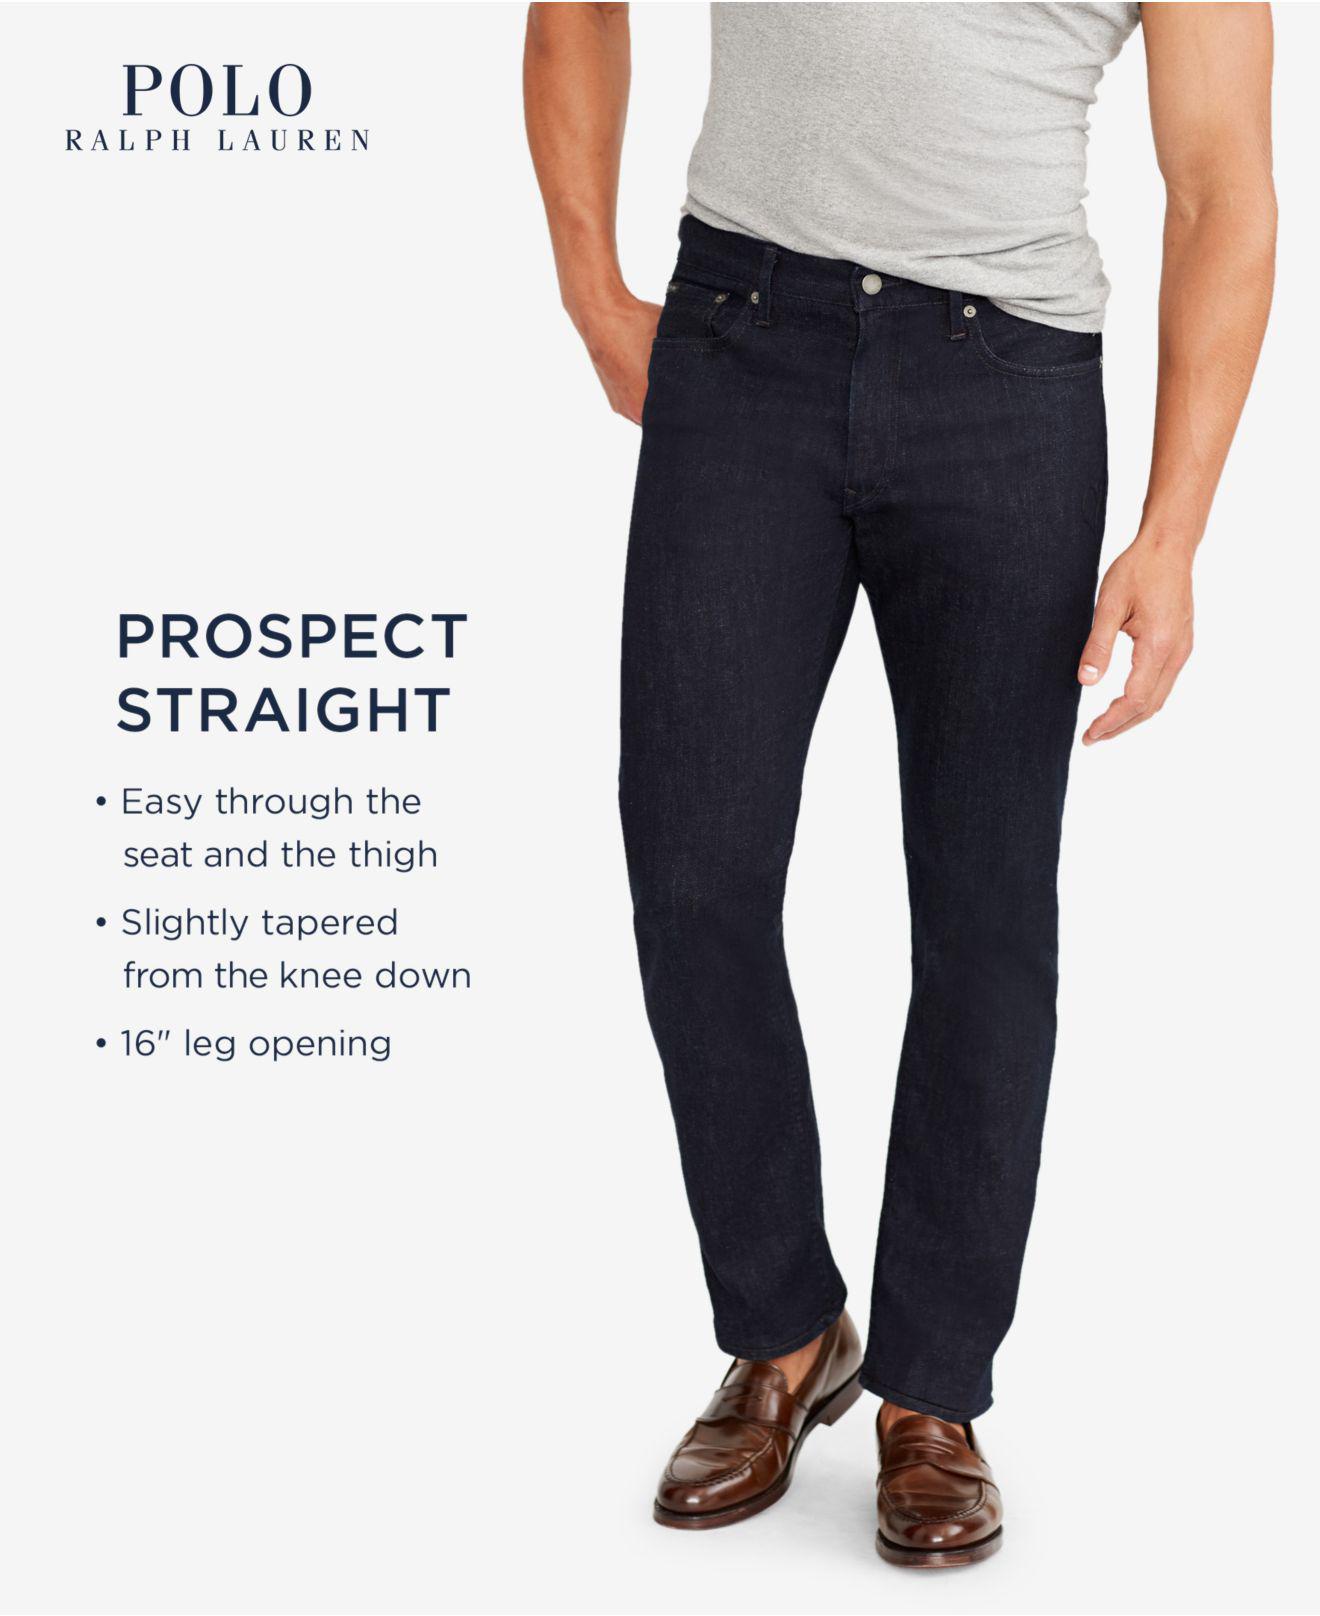 polo prospect straight pants